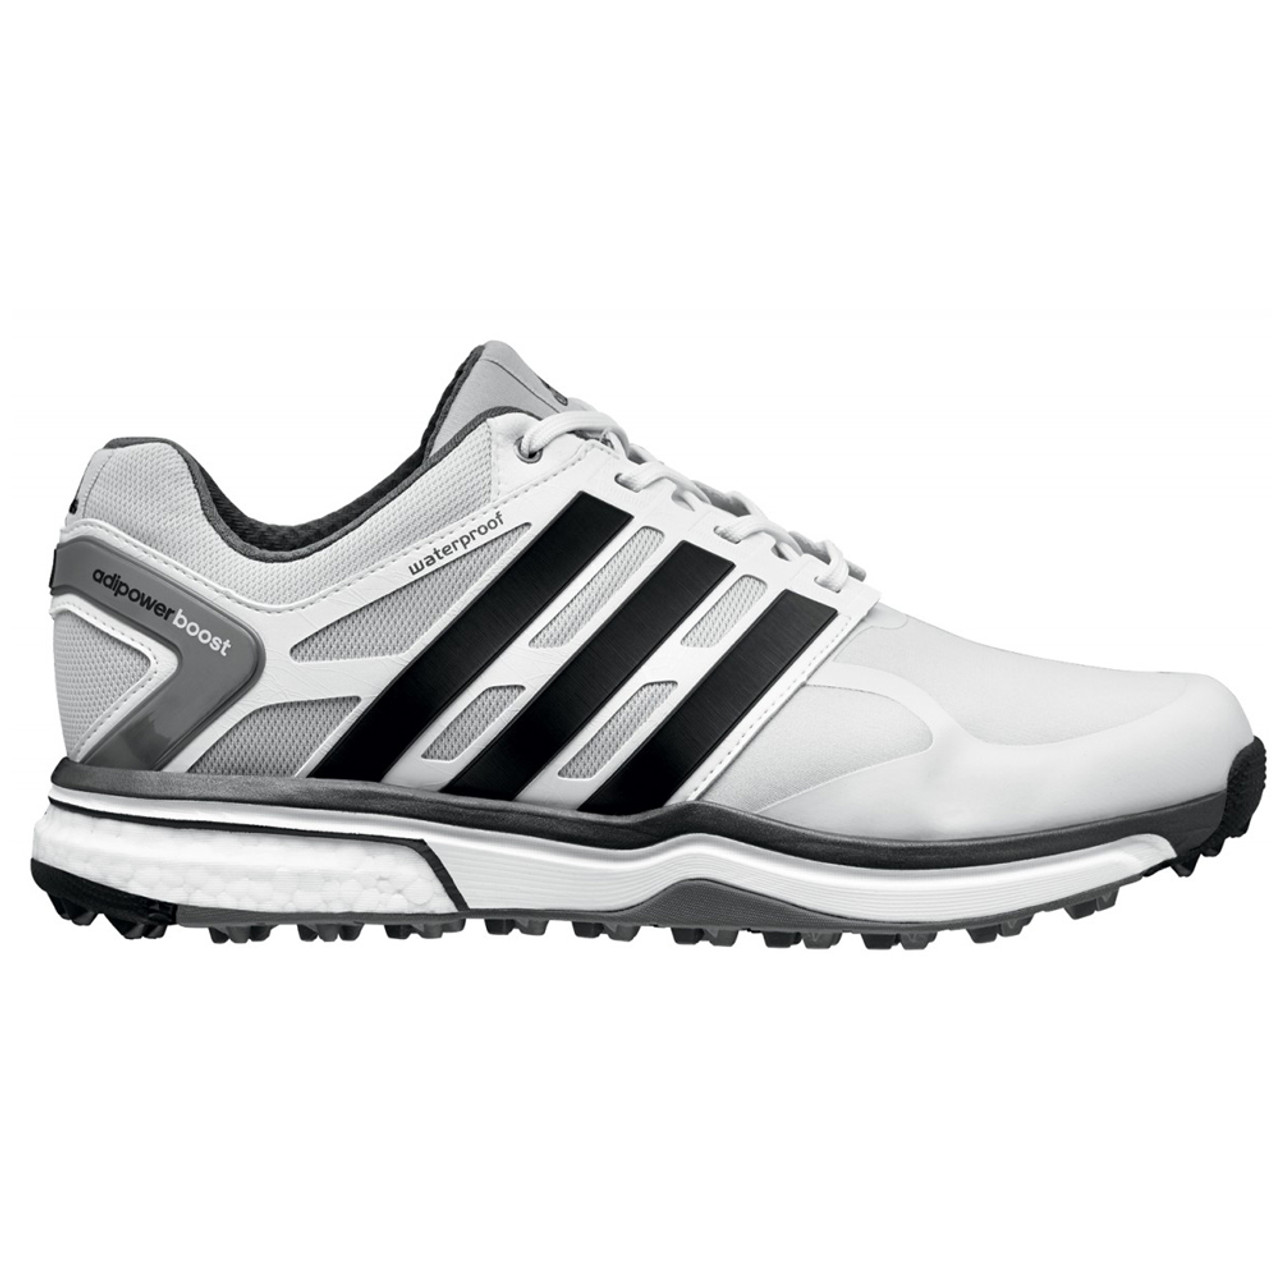 Adidas Men's Adipower S Boost Shoe - | Discount Adidas Men's Athletic Shoes & More - Shoolu.com | Shoolu.com